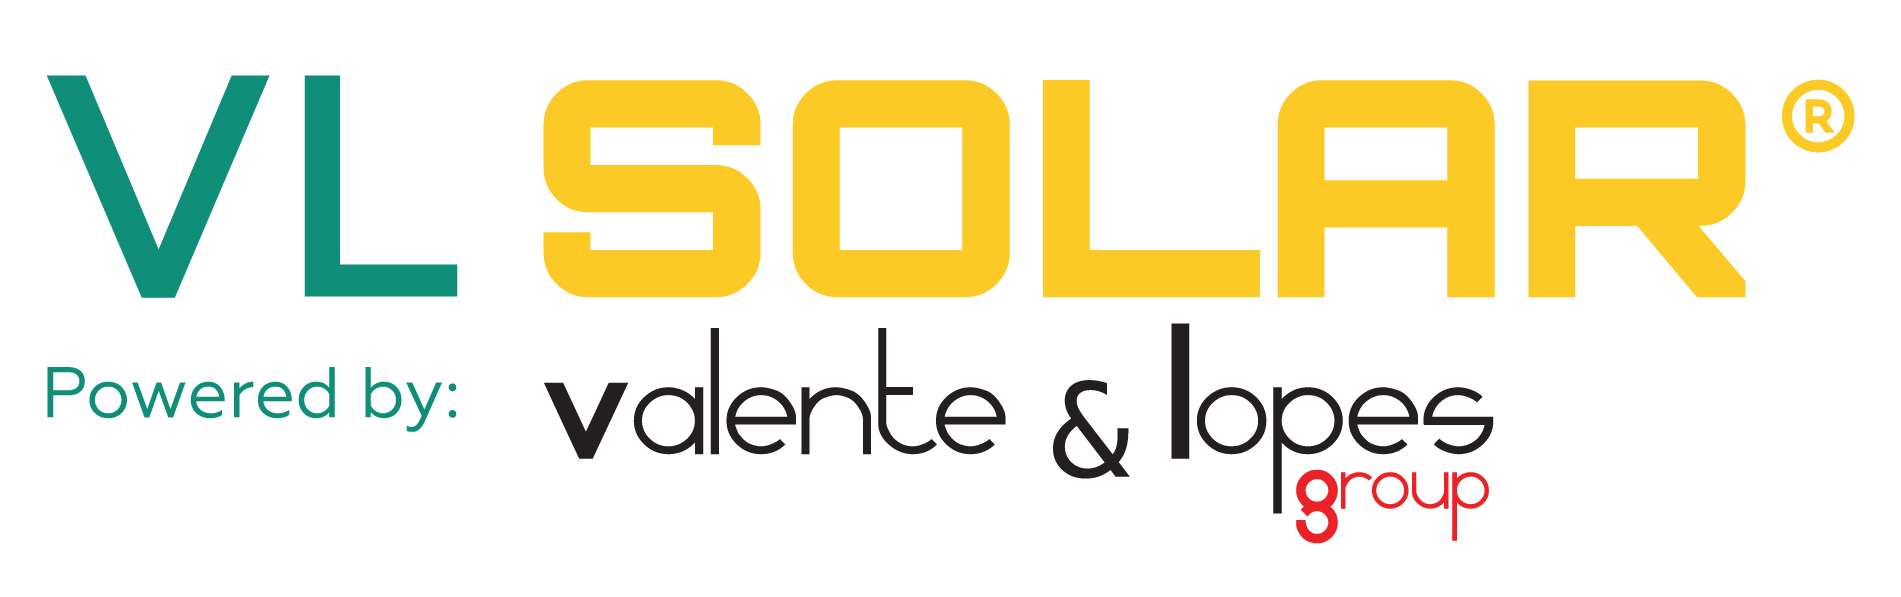 Valente & Lopes  VL SOLAR – Do you already know the new brand of Grupo  Valente & Lopes?